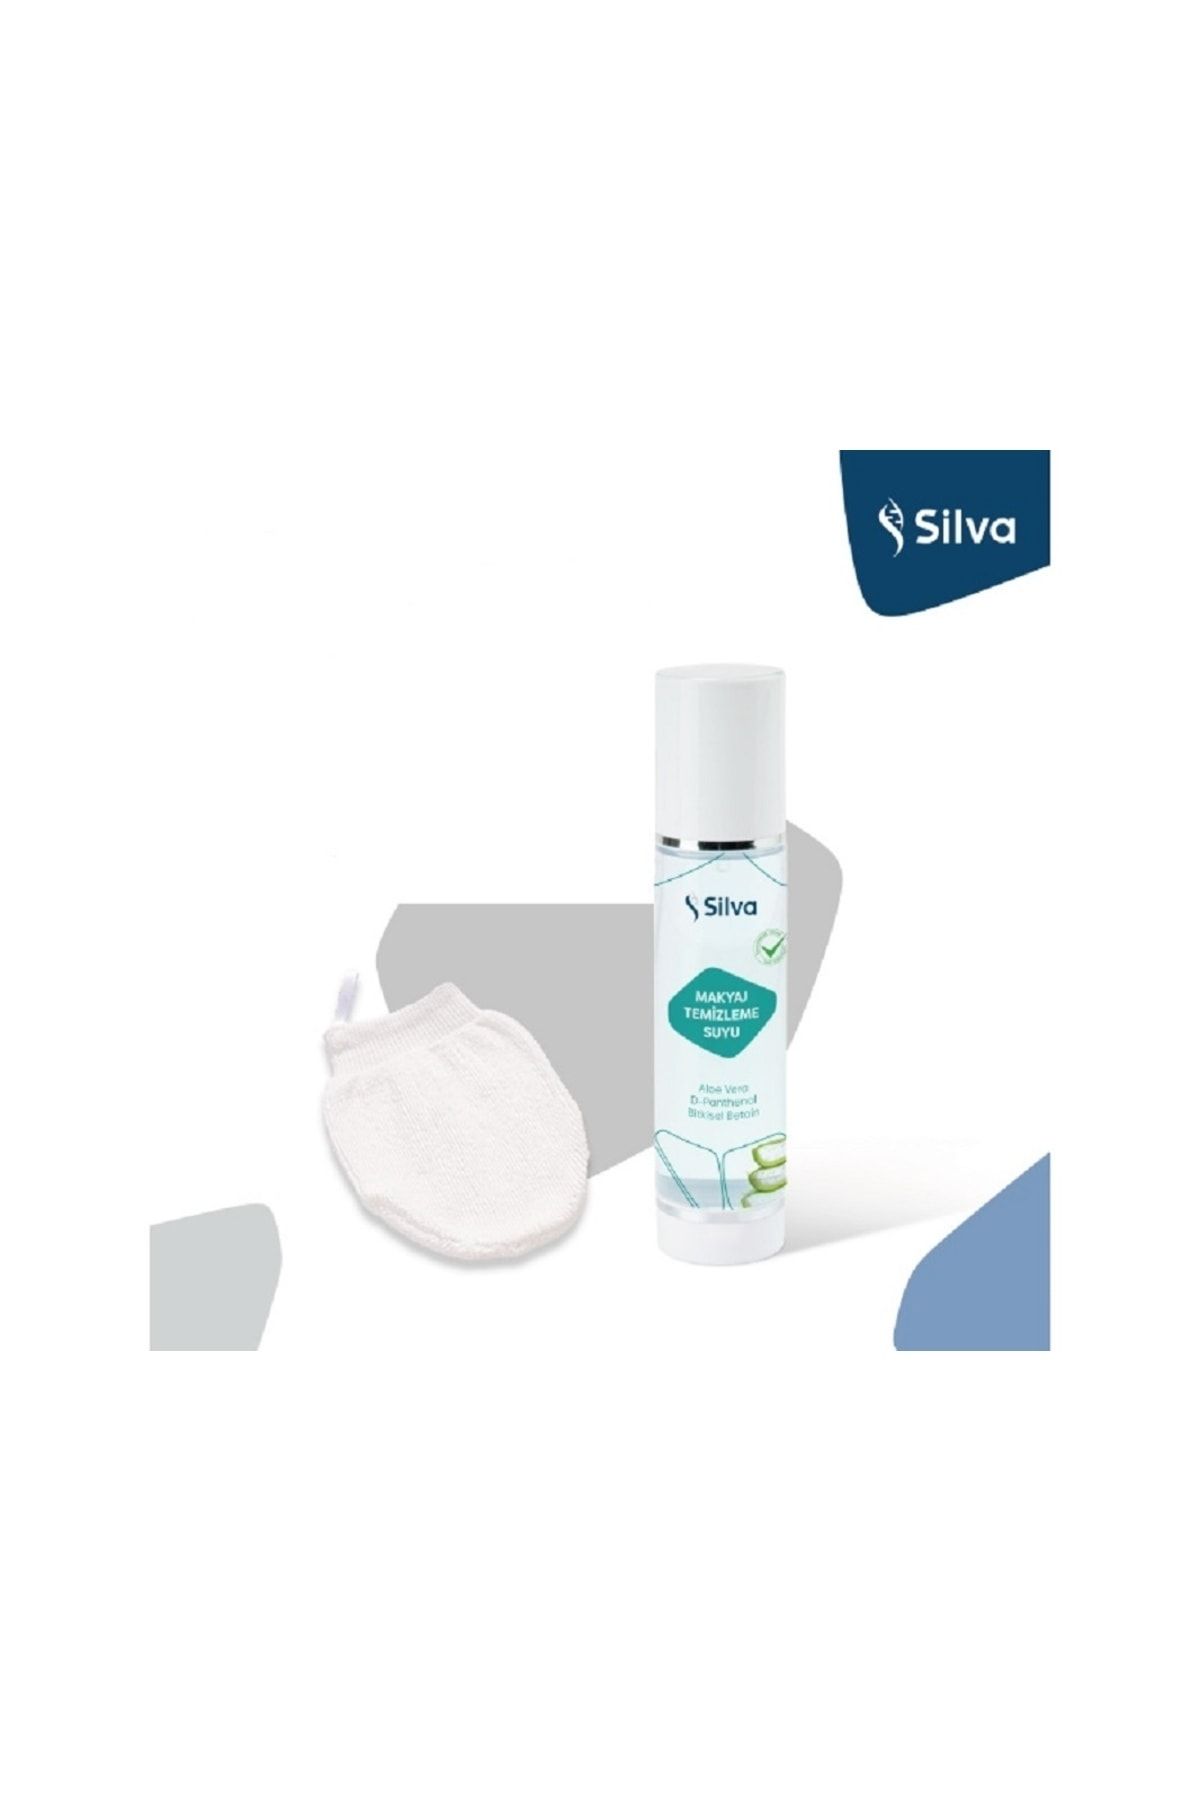 Silva Premium Yüz Kesesi + Makyaj Temizleme Suyu 2 Li